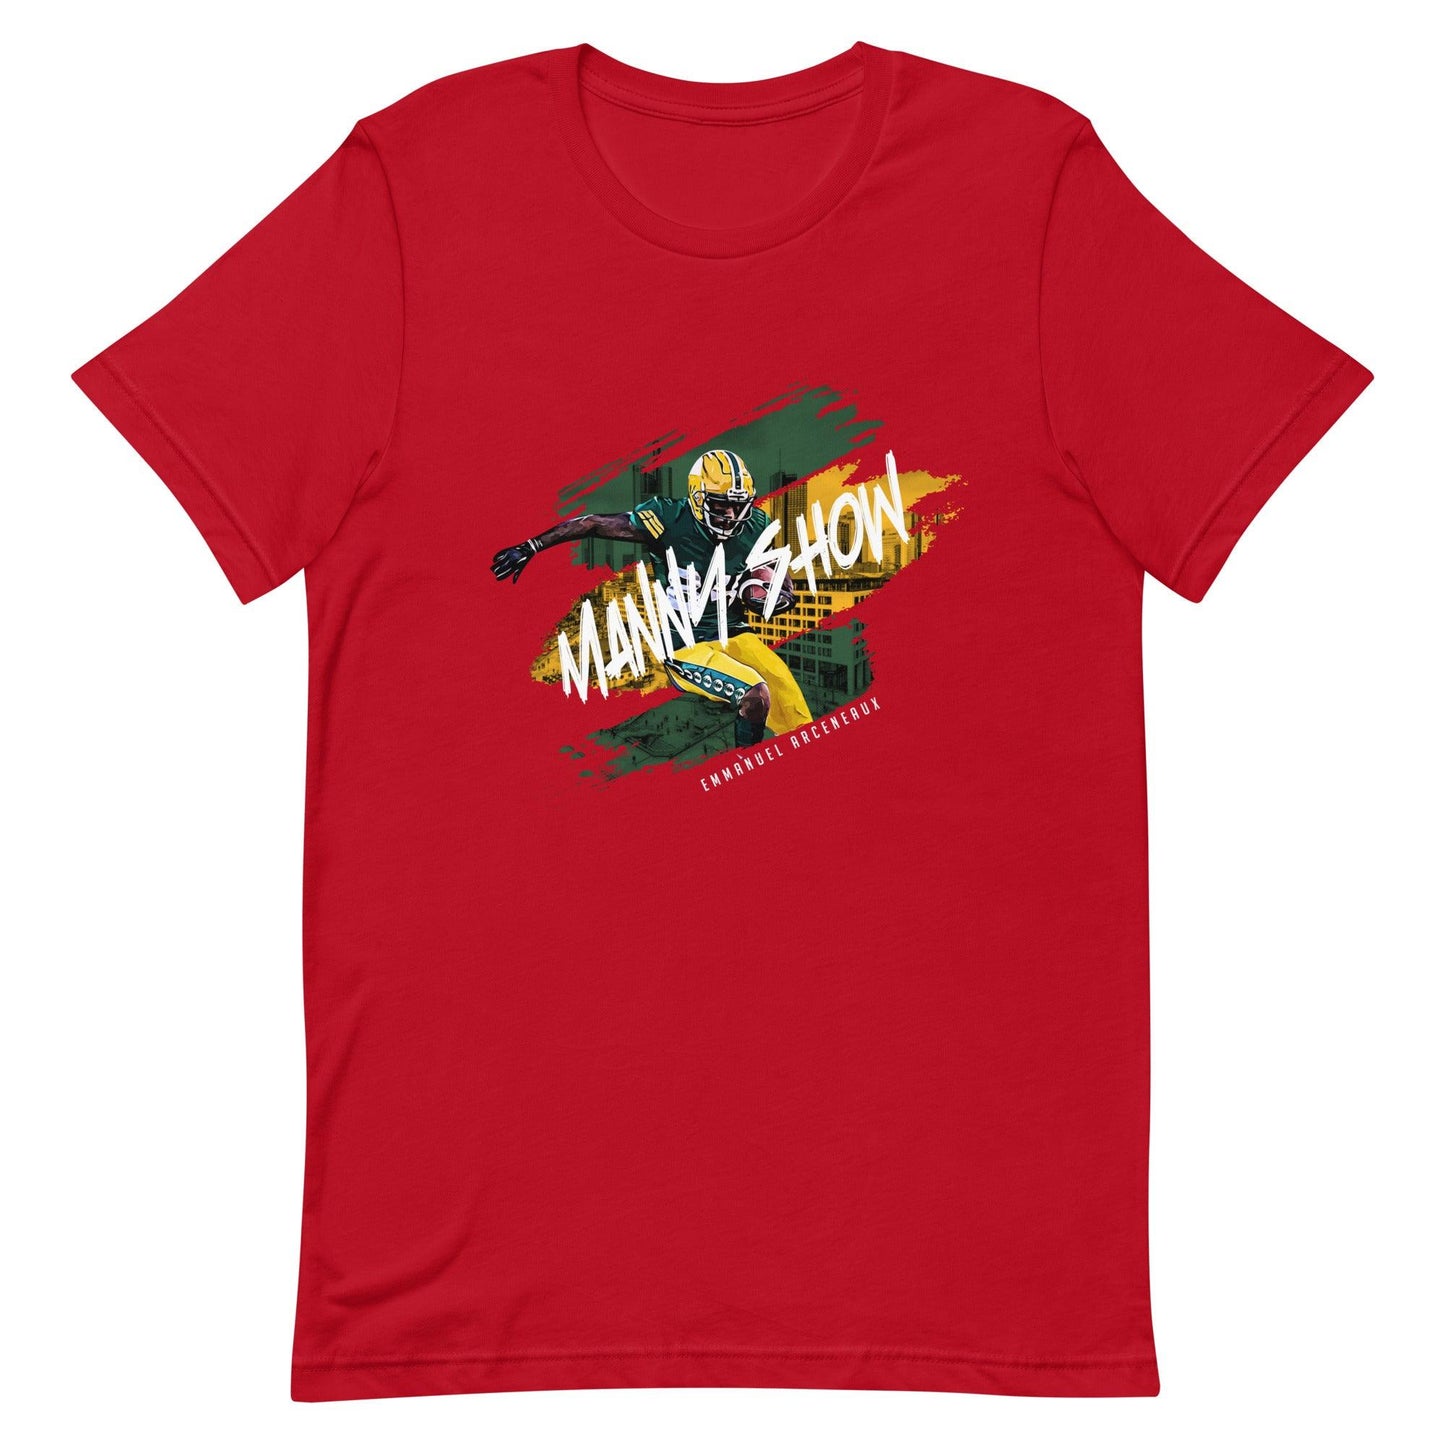 Emmanuel Arceneaux "Manny Show" t-shirt - Fan Arch